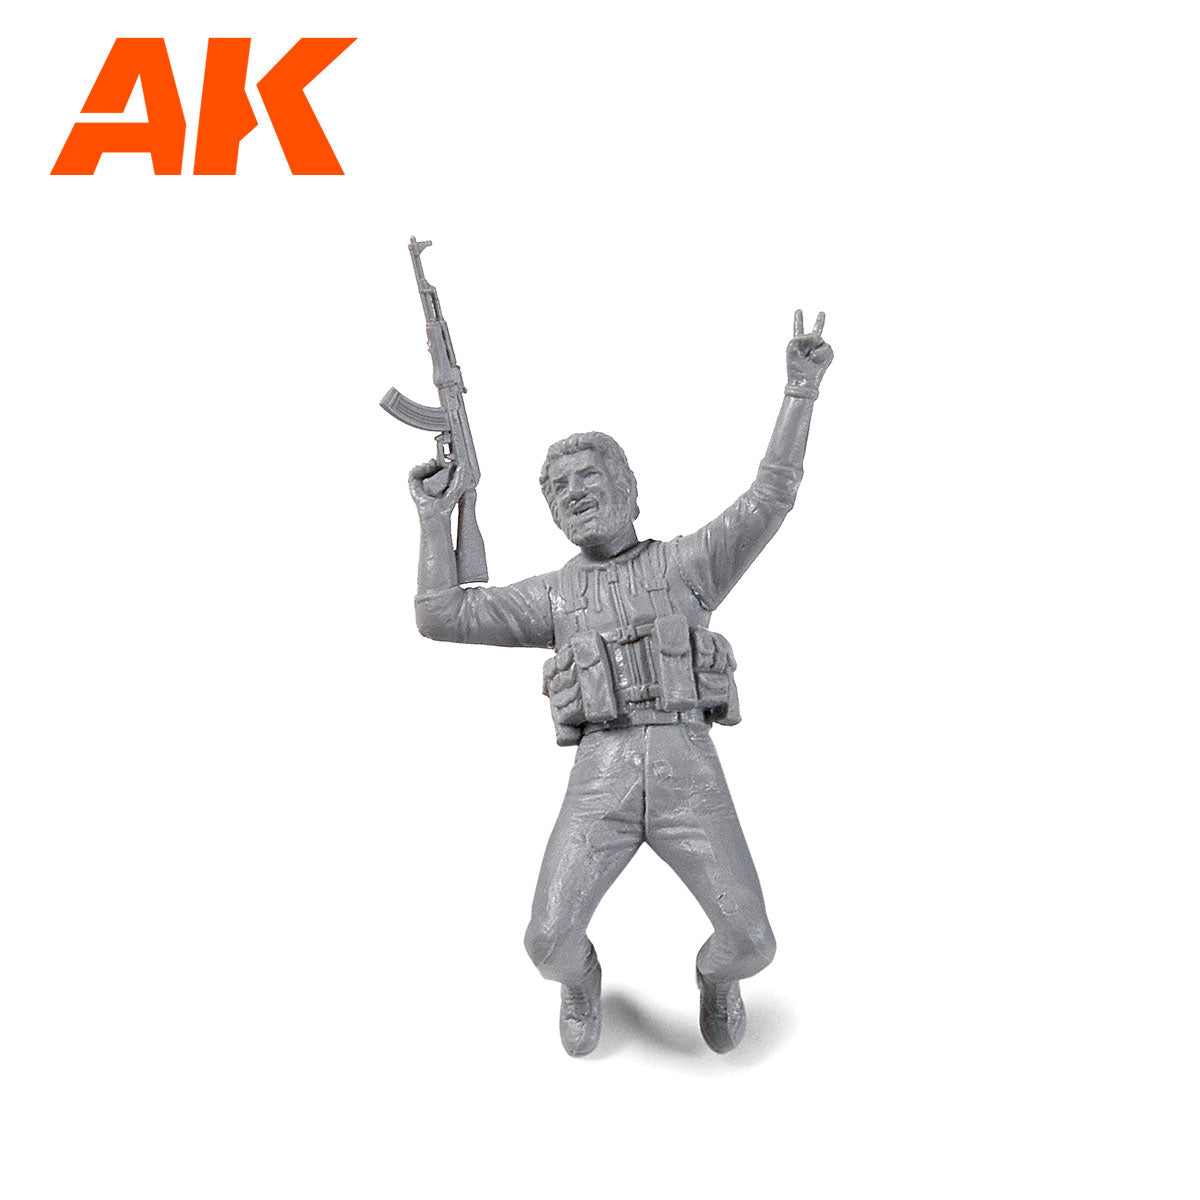 Michigan Toy Soldier Company : AK Interactive - AK Interactive Technicals